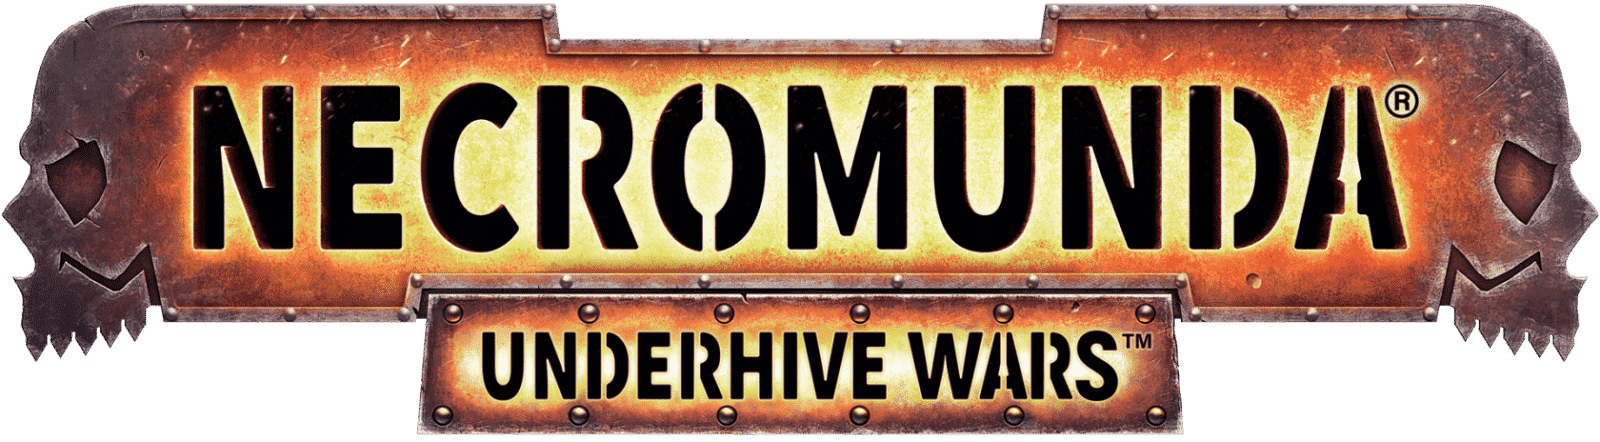 necromunda underhive wars logo